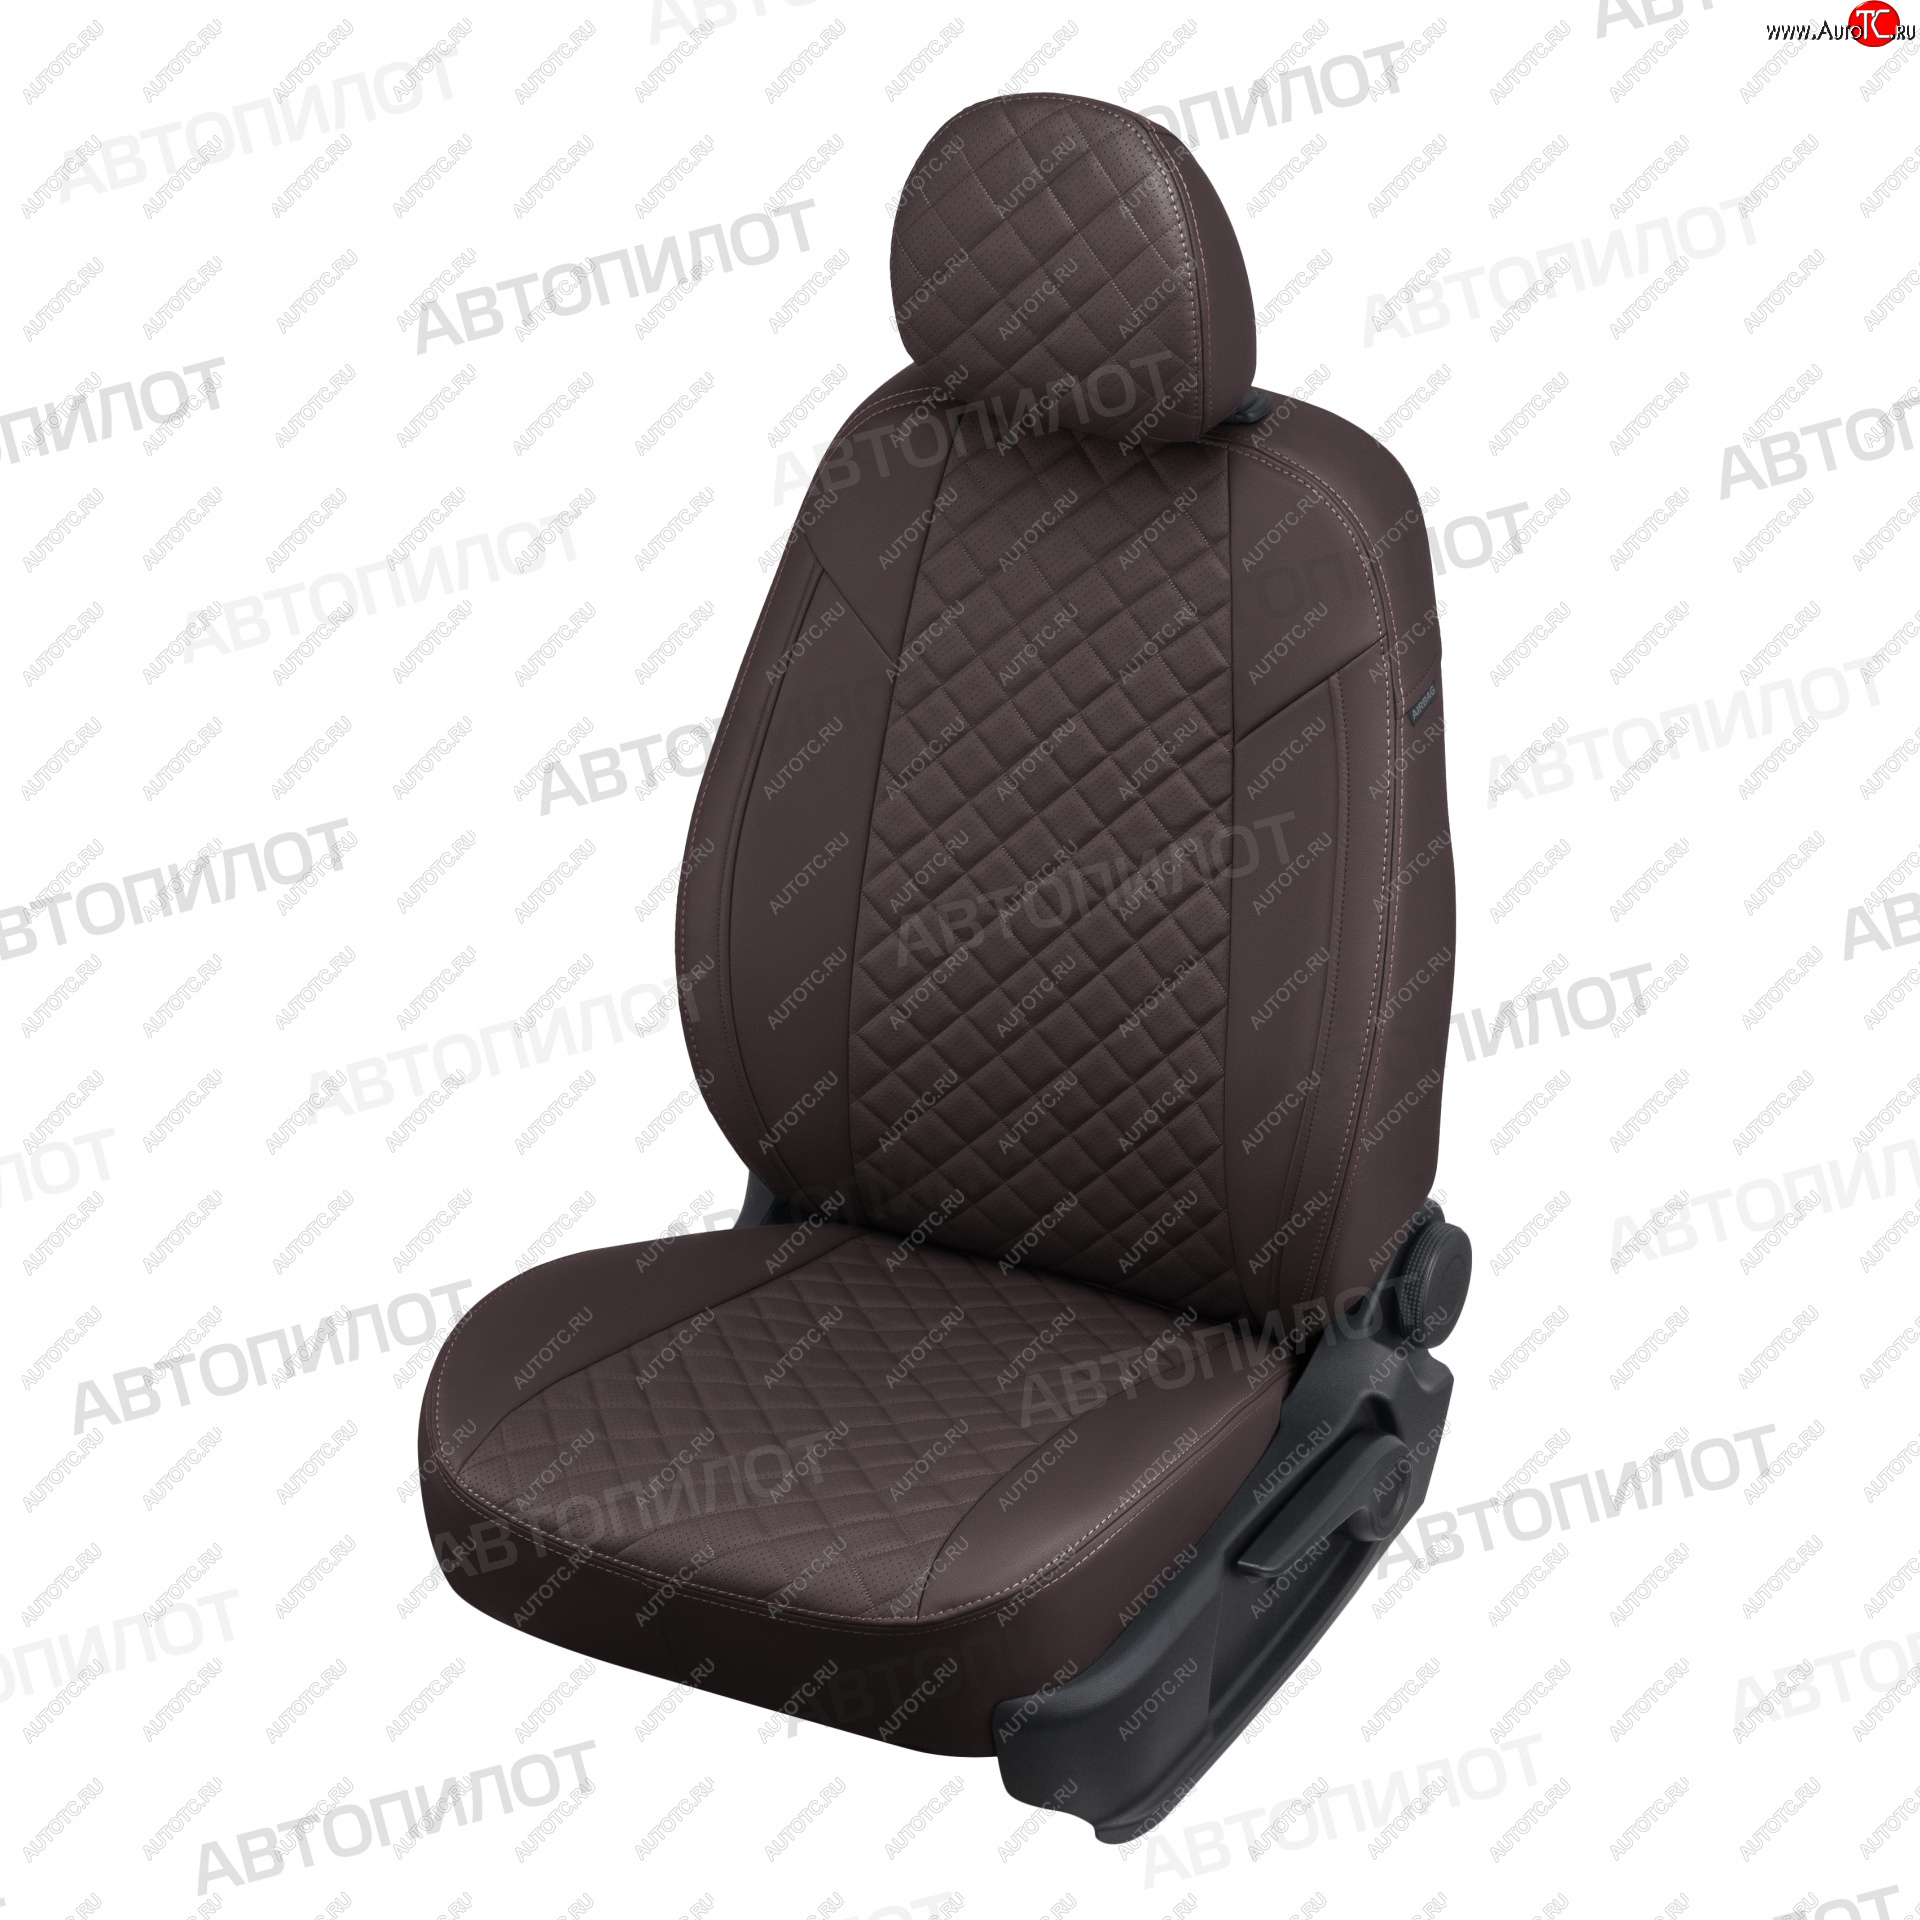 13 999 р. Чехлы сидений (экокожа) Автопилот Ромб  Fiat Bravo  198 (2007-2015)